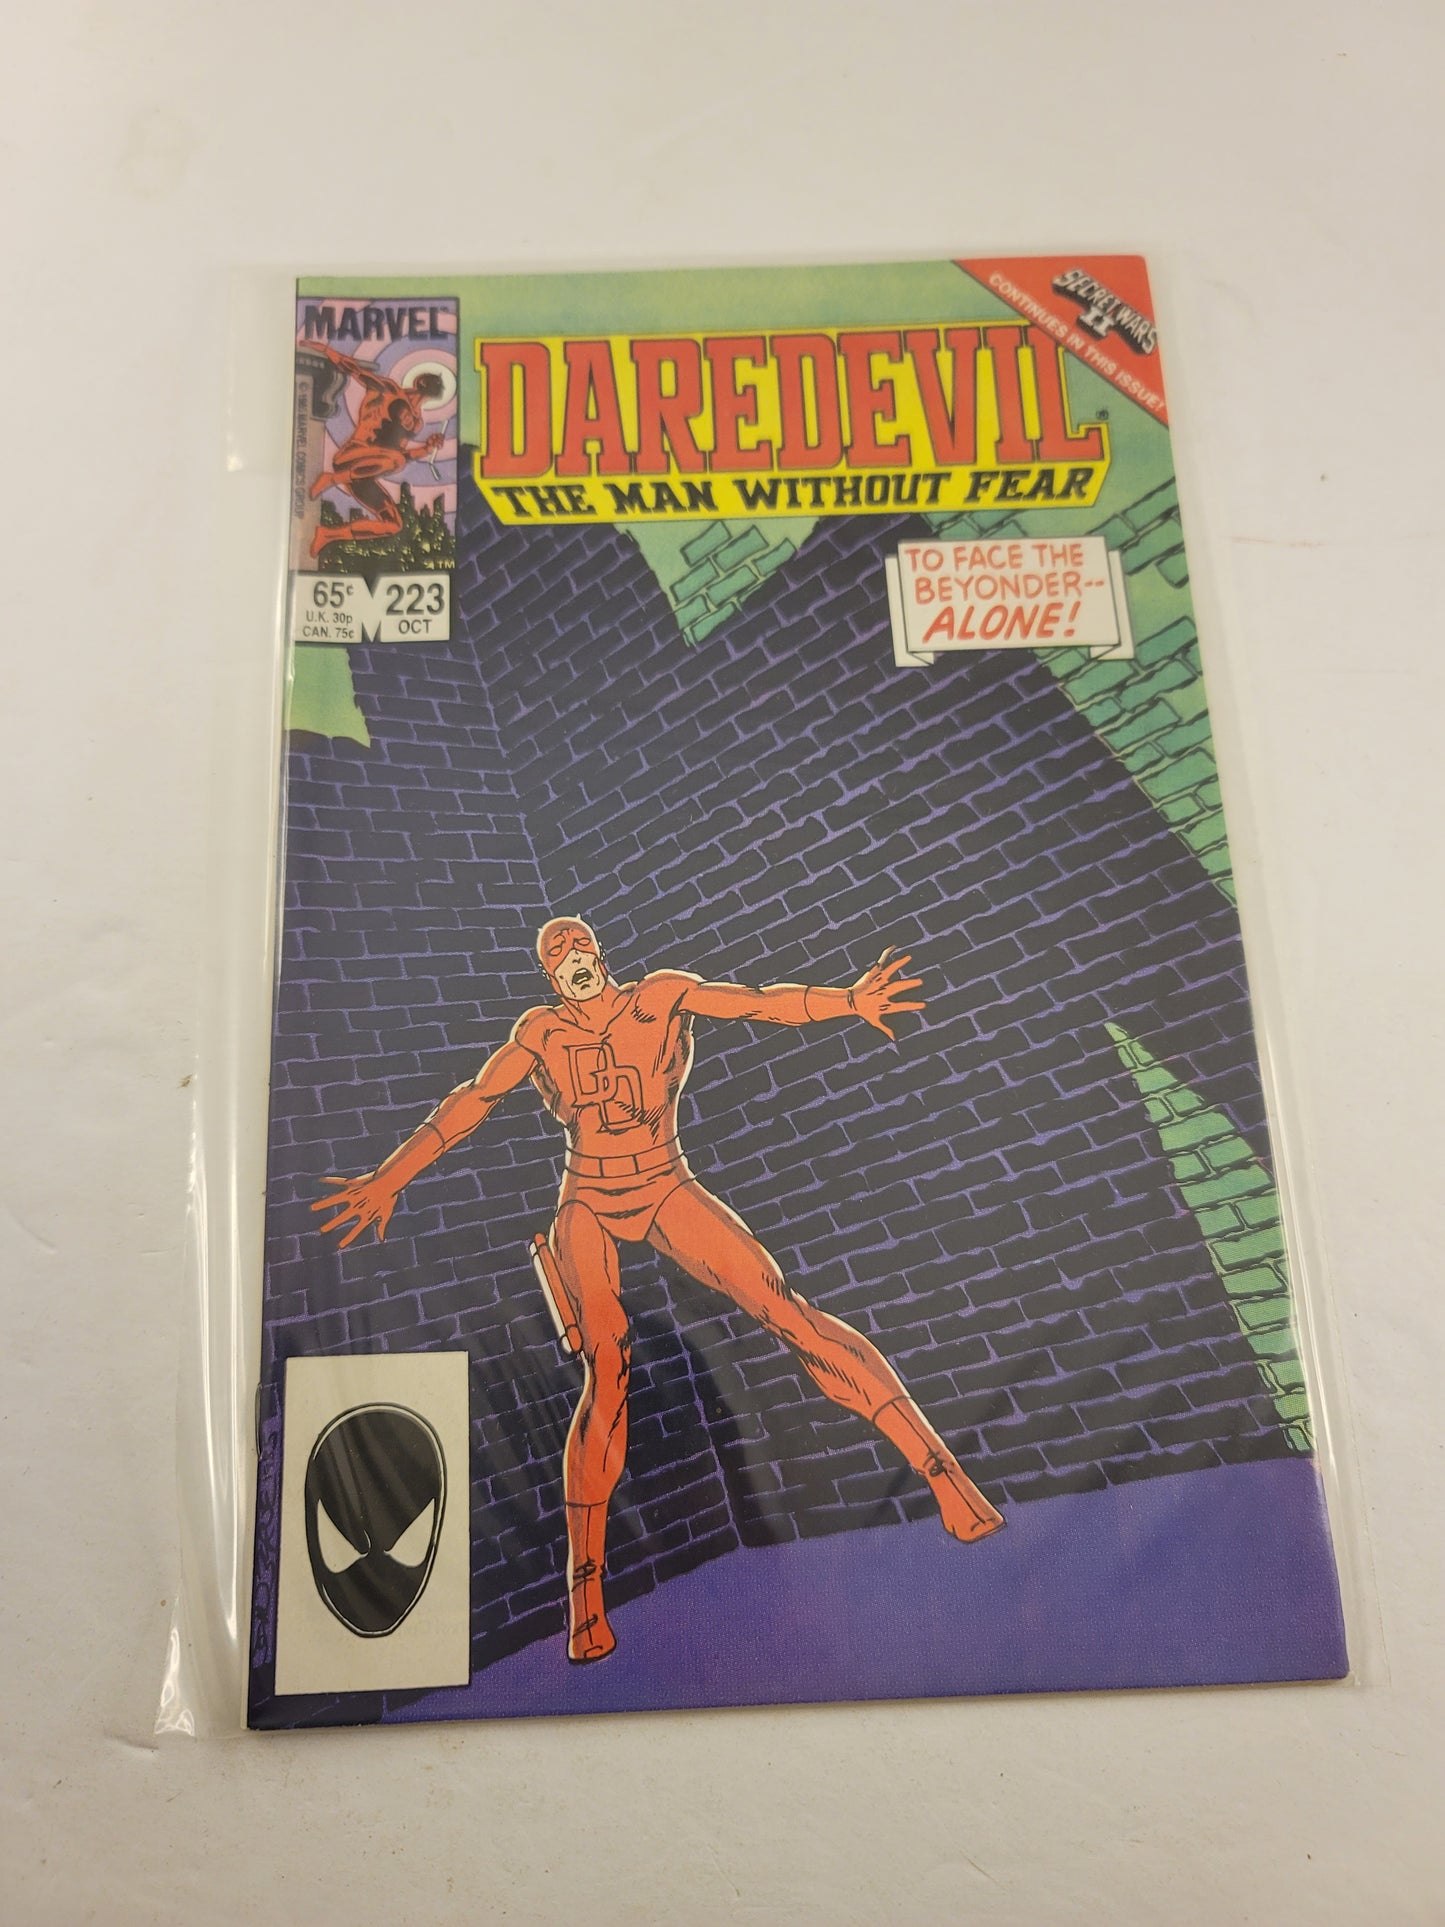 Daredevil Volume 1 Issues 215 216 217 218 219 220 221 222 223 224 225